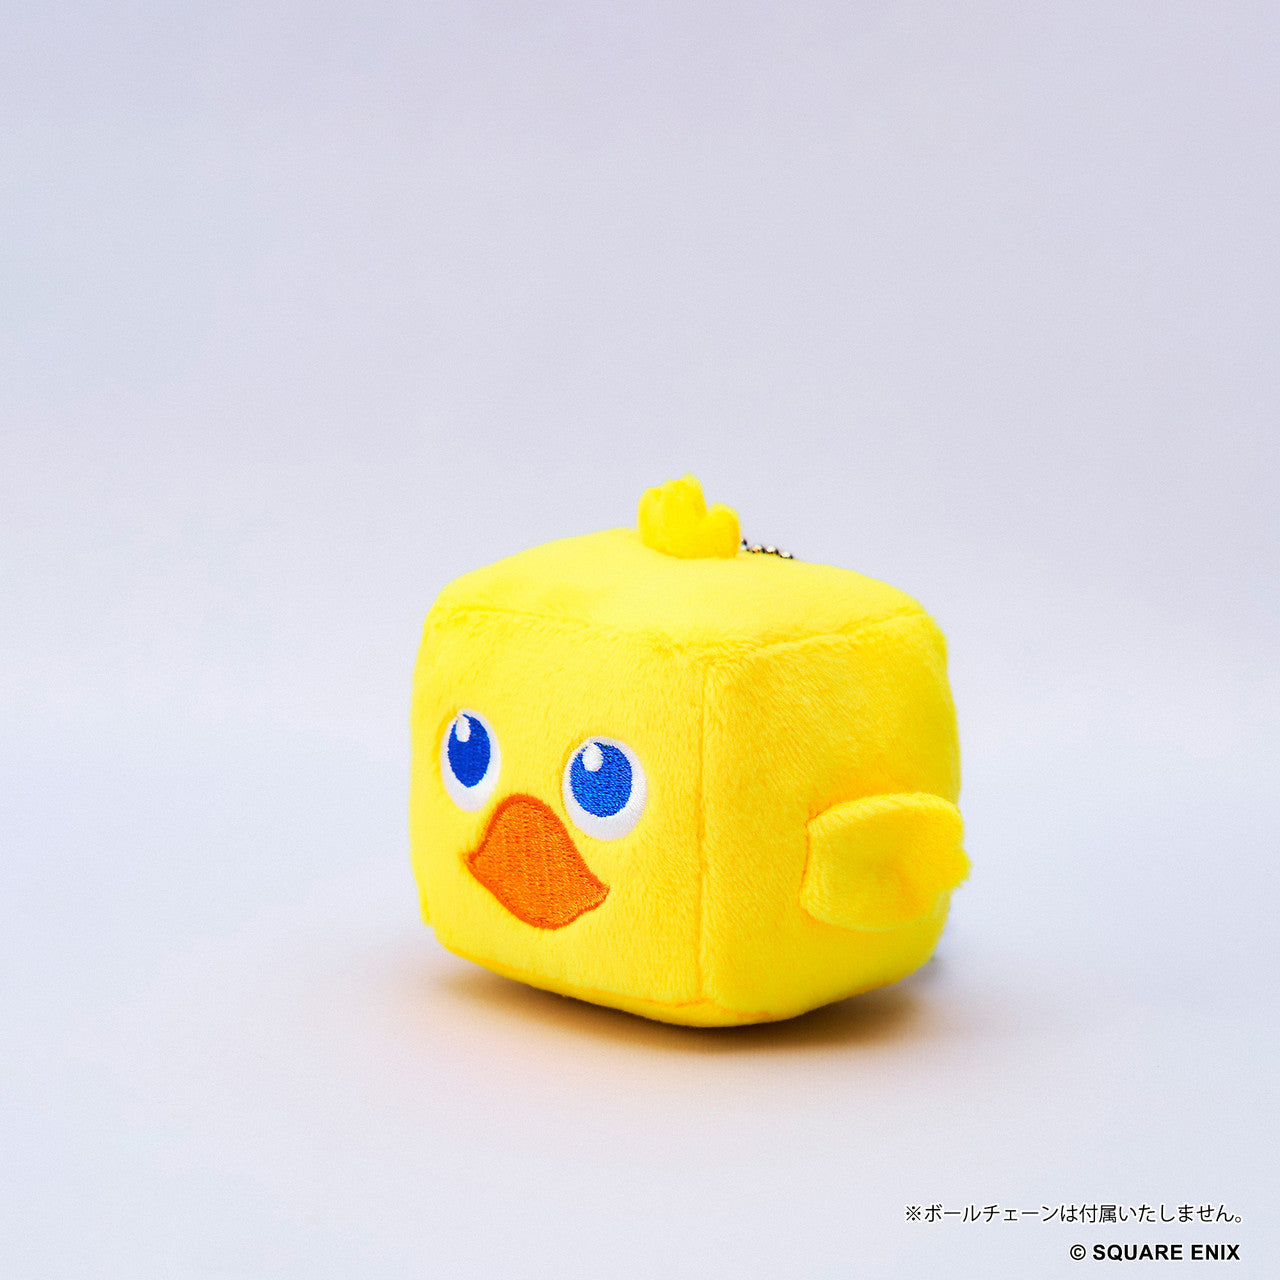 Square Enix Chocobo S Size Final Fantasy Cube Plush